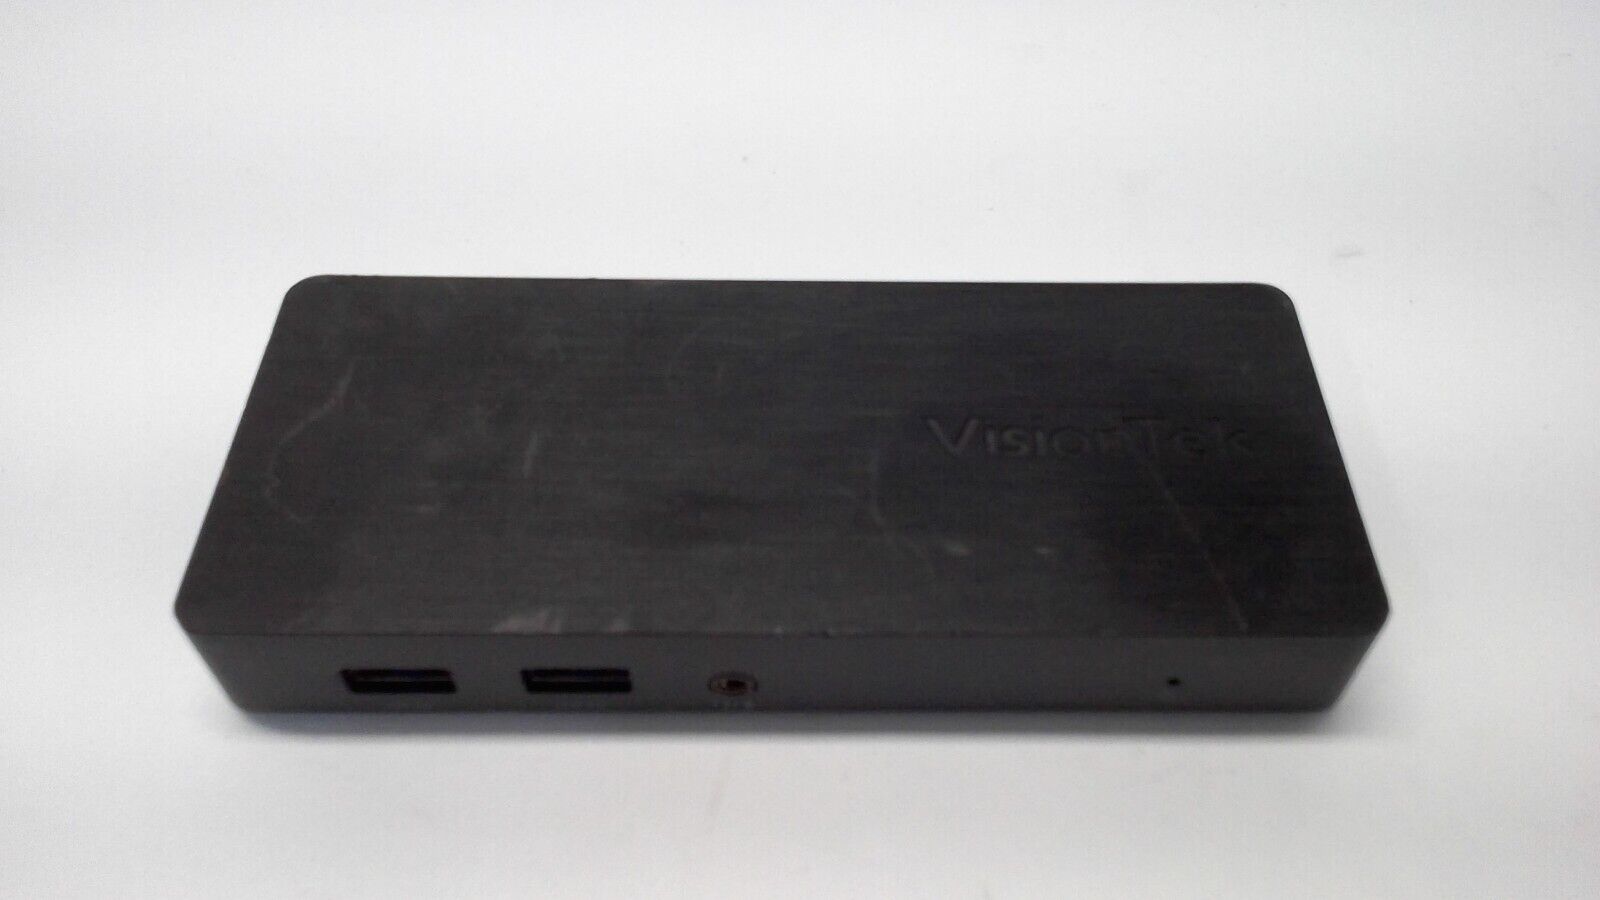 Visiontek VT1000 Dual Display Universal USB 3.0 Docking Station 901147